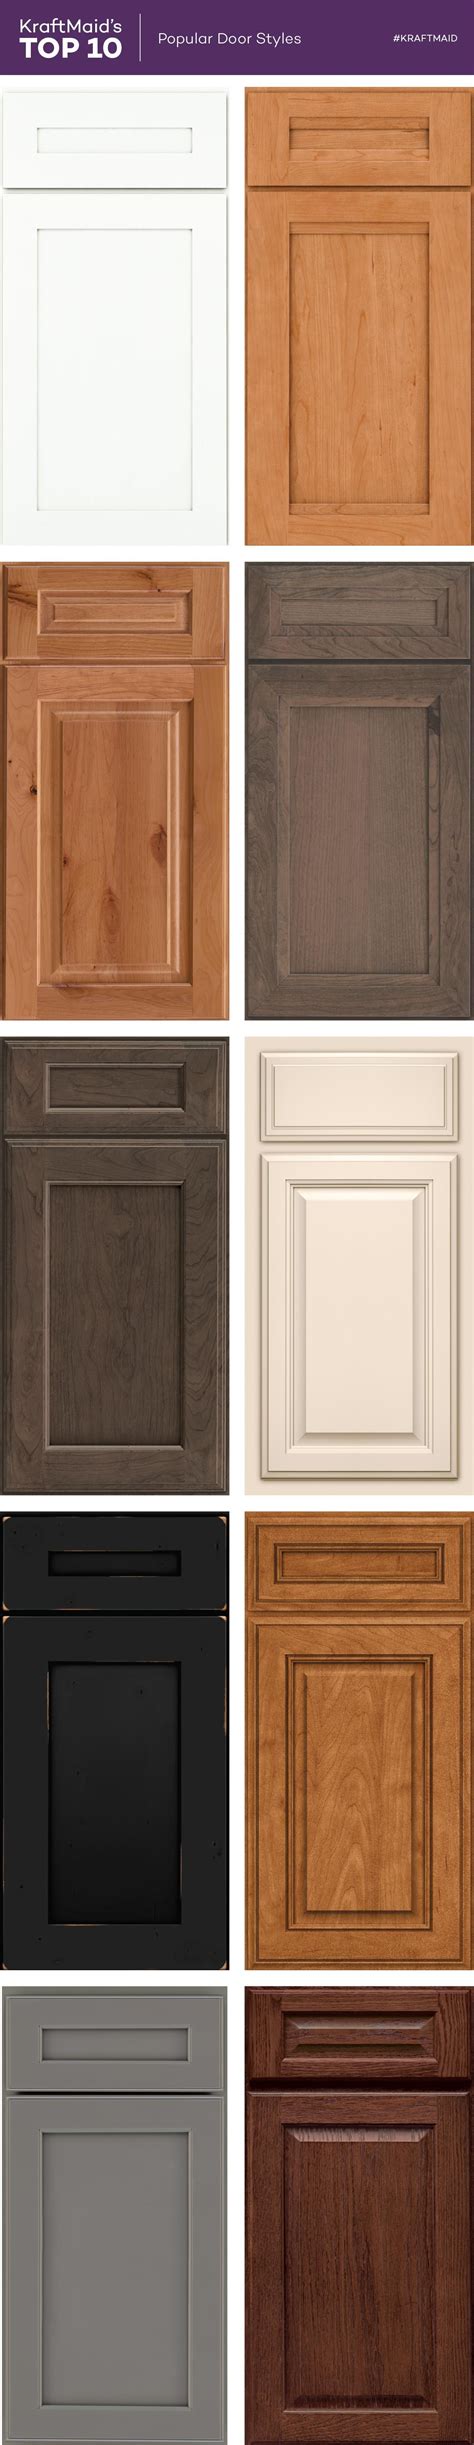 Kraftmaid Kitchen Cabinet Door Styles